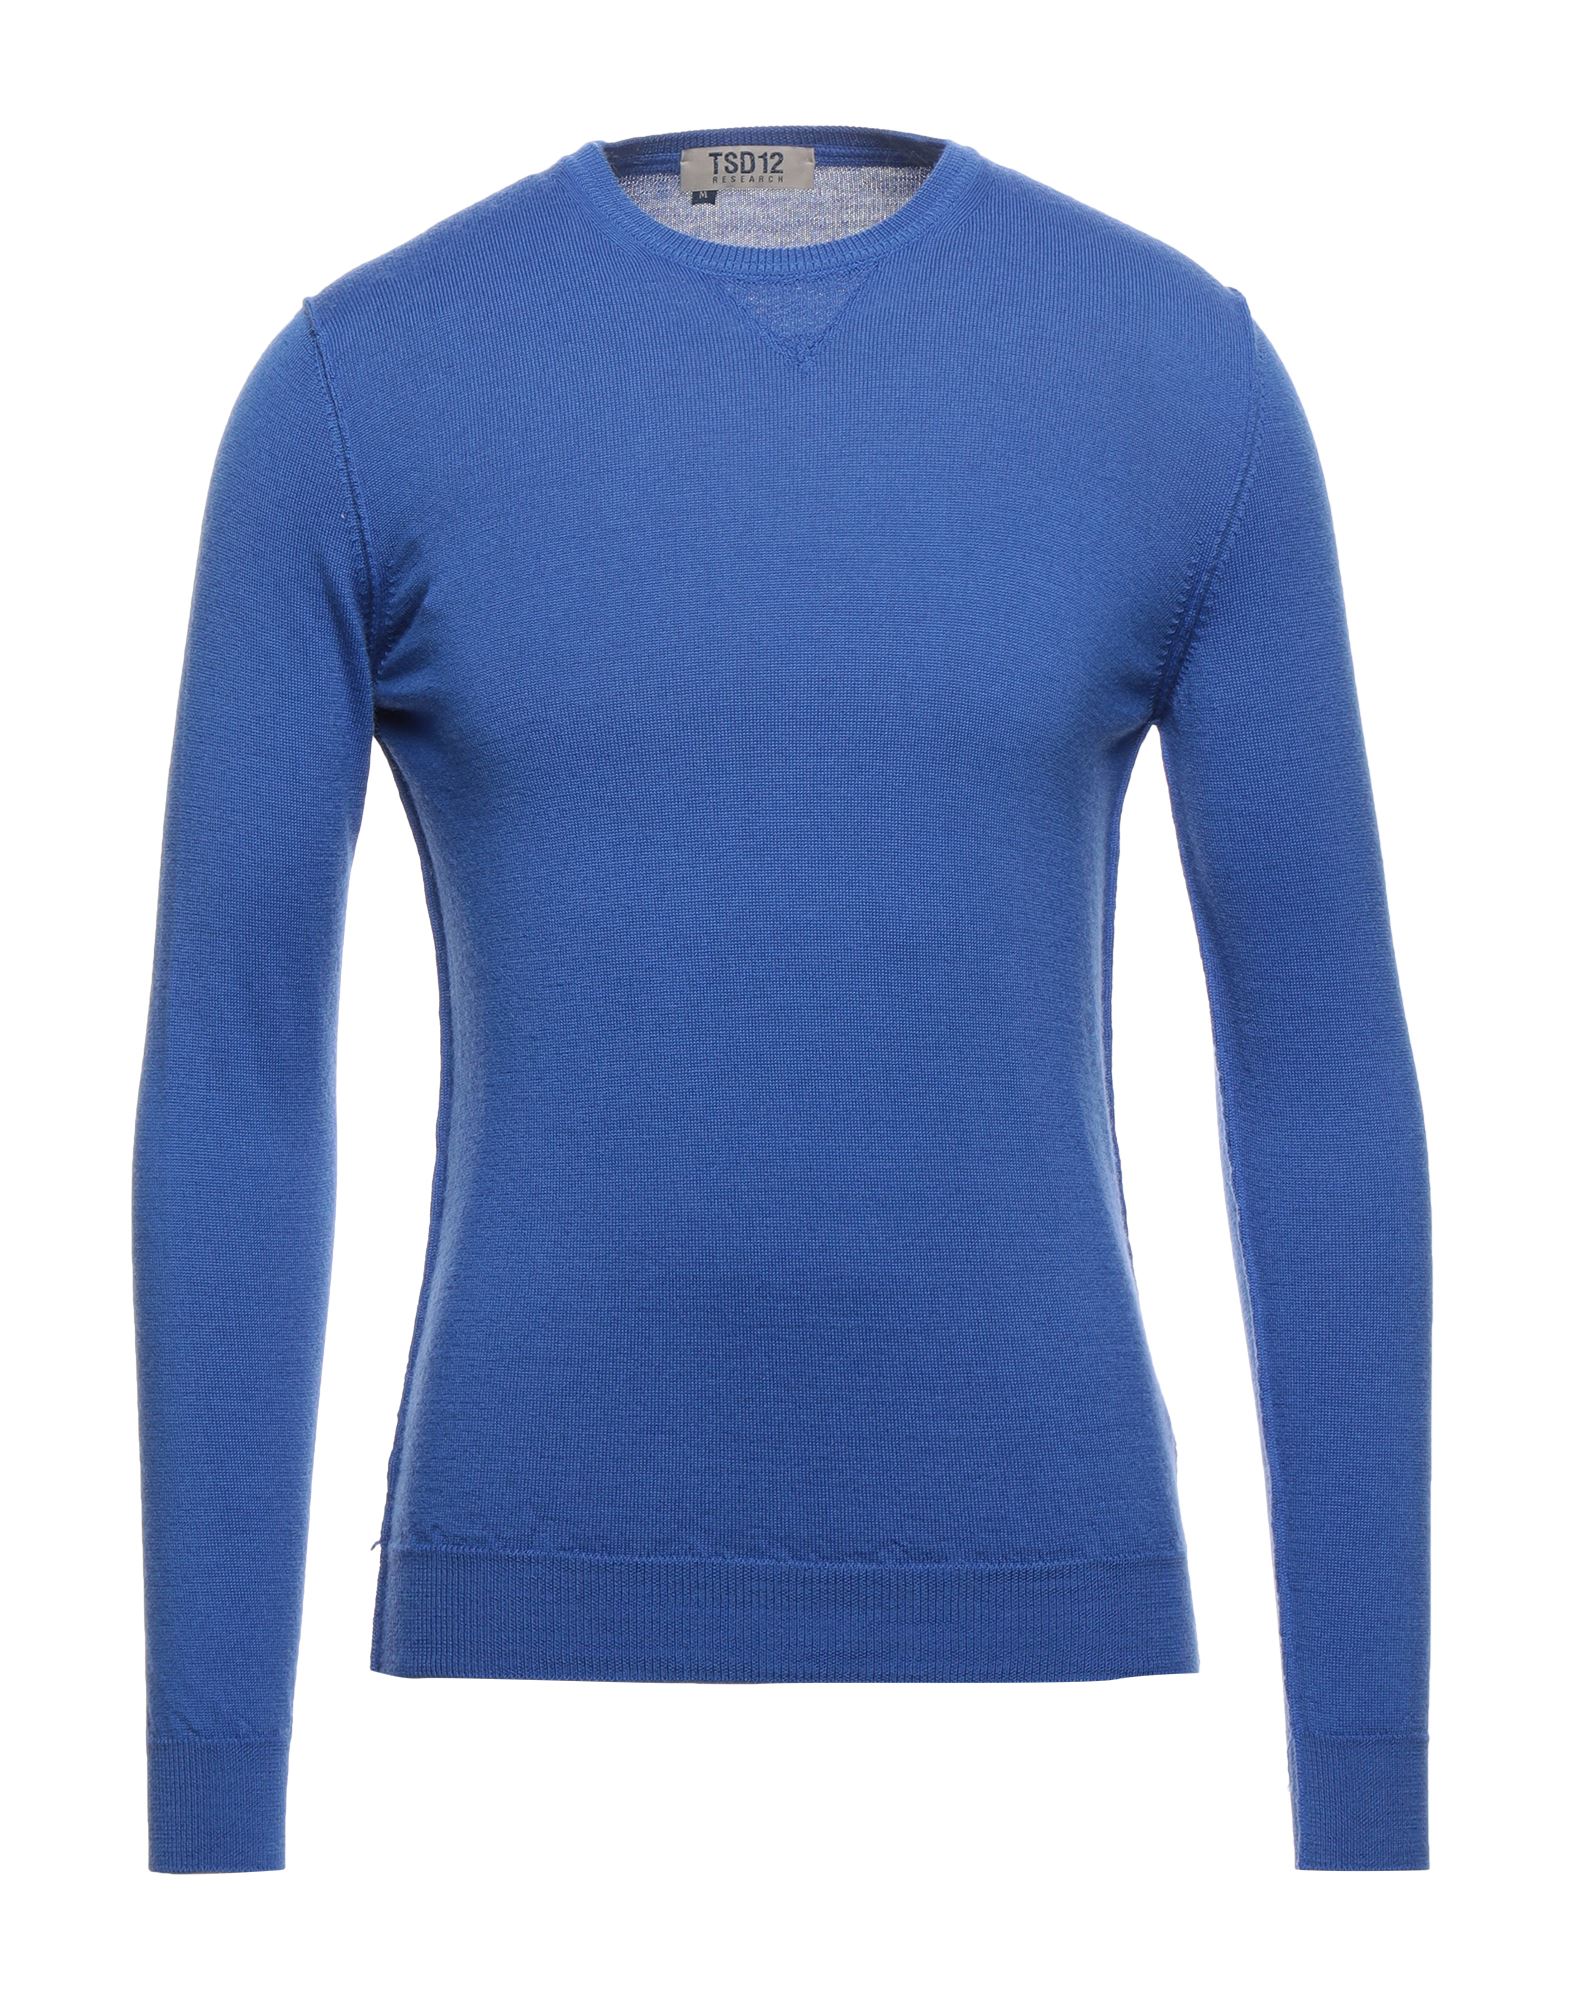 Tsd12 Man Sweater Bright Blue Size 3xl Merino Wool, Acrylic